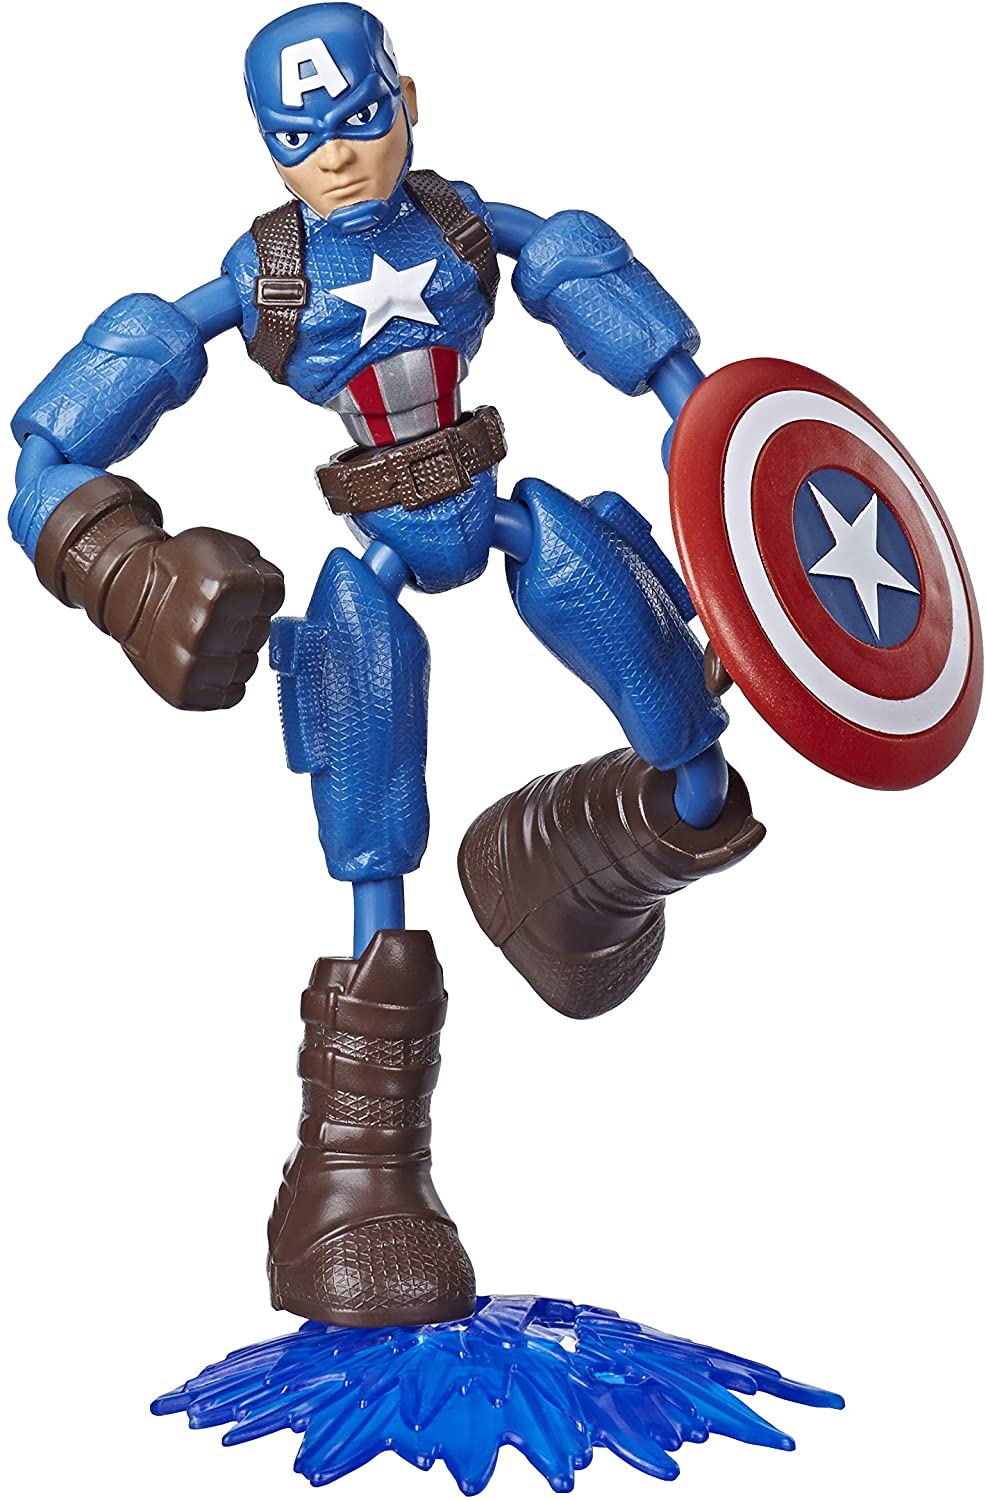 Bend and Flex E7869 Marvel Avengers Captain America Action Figure Toy